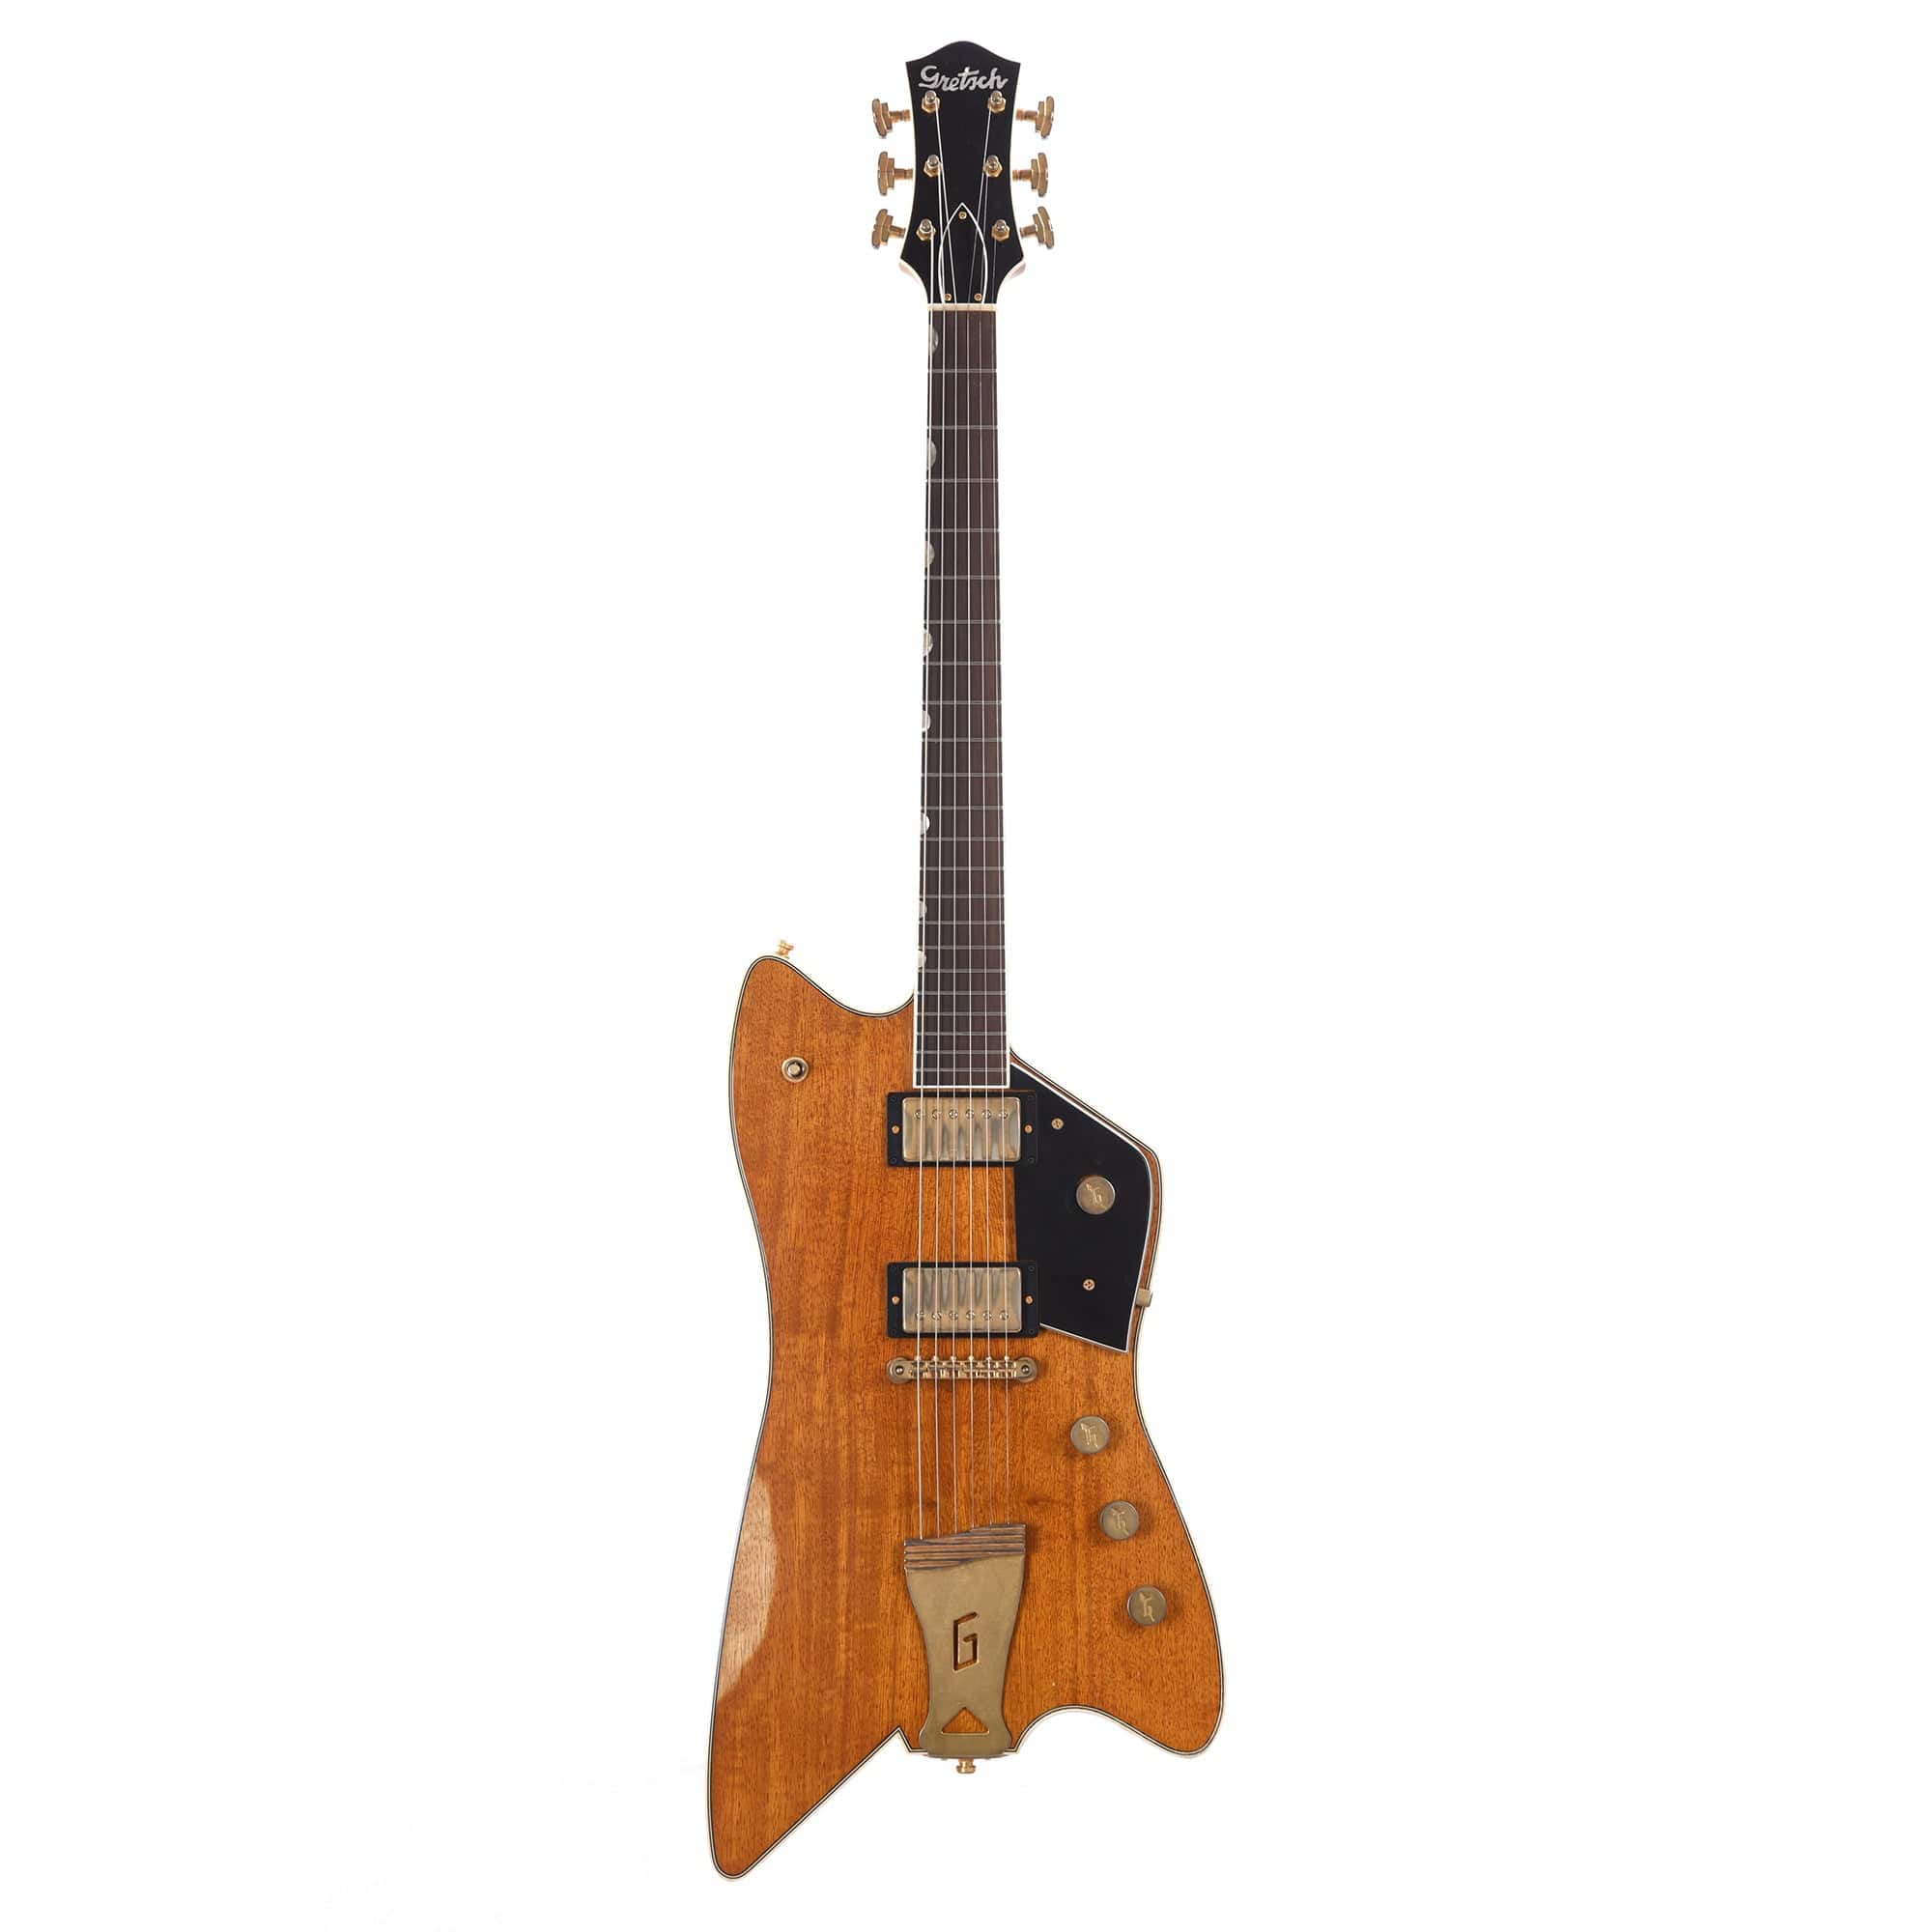 Gretsch Custom Shop G6199 Caddy Bo Korina Heavy Relic w/ThroBak SLE101+s Master Built by Stephen Stern Electric Guitars / Solid Body